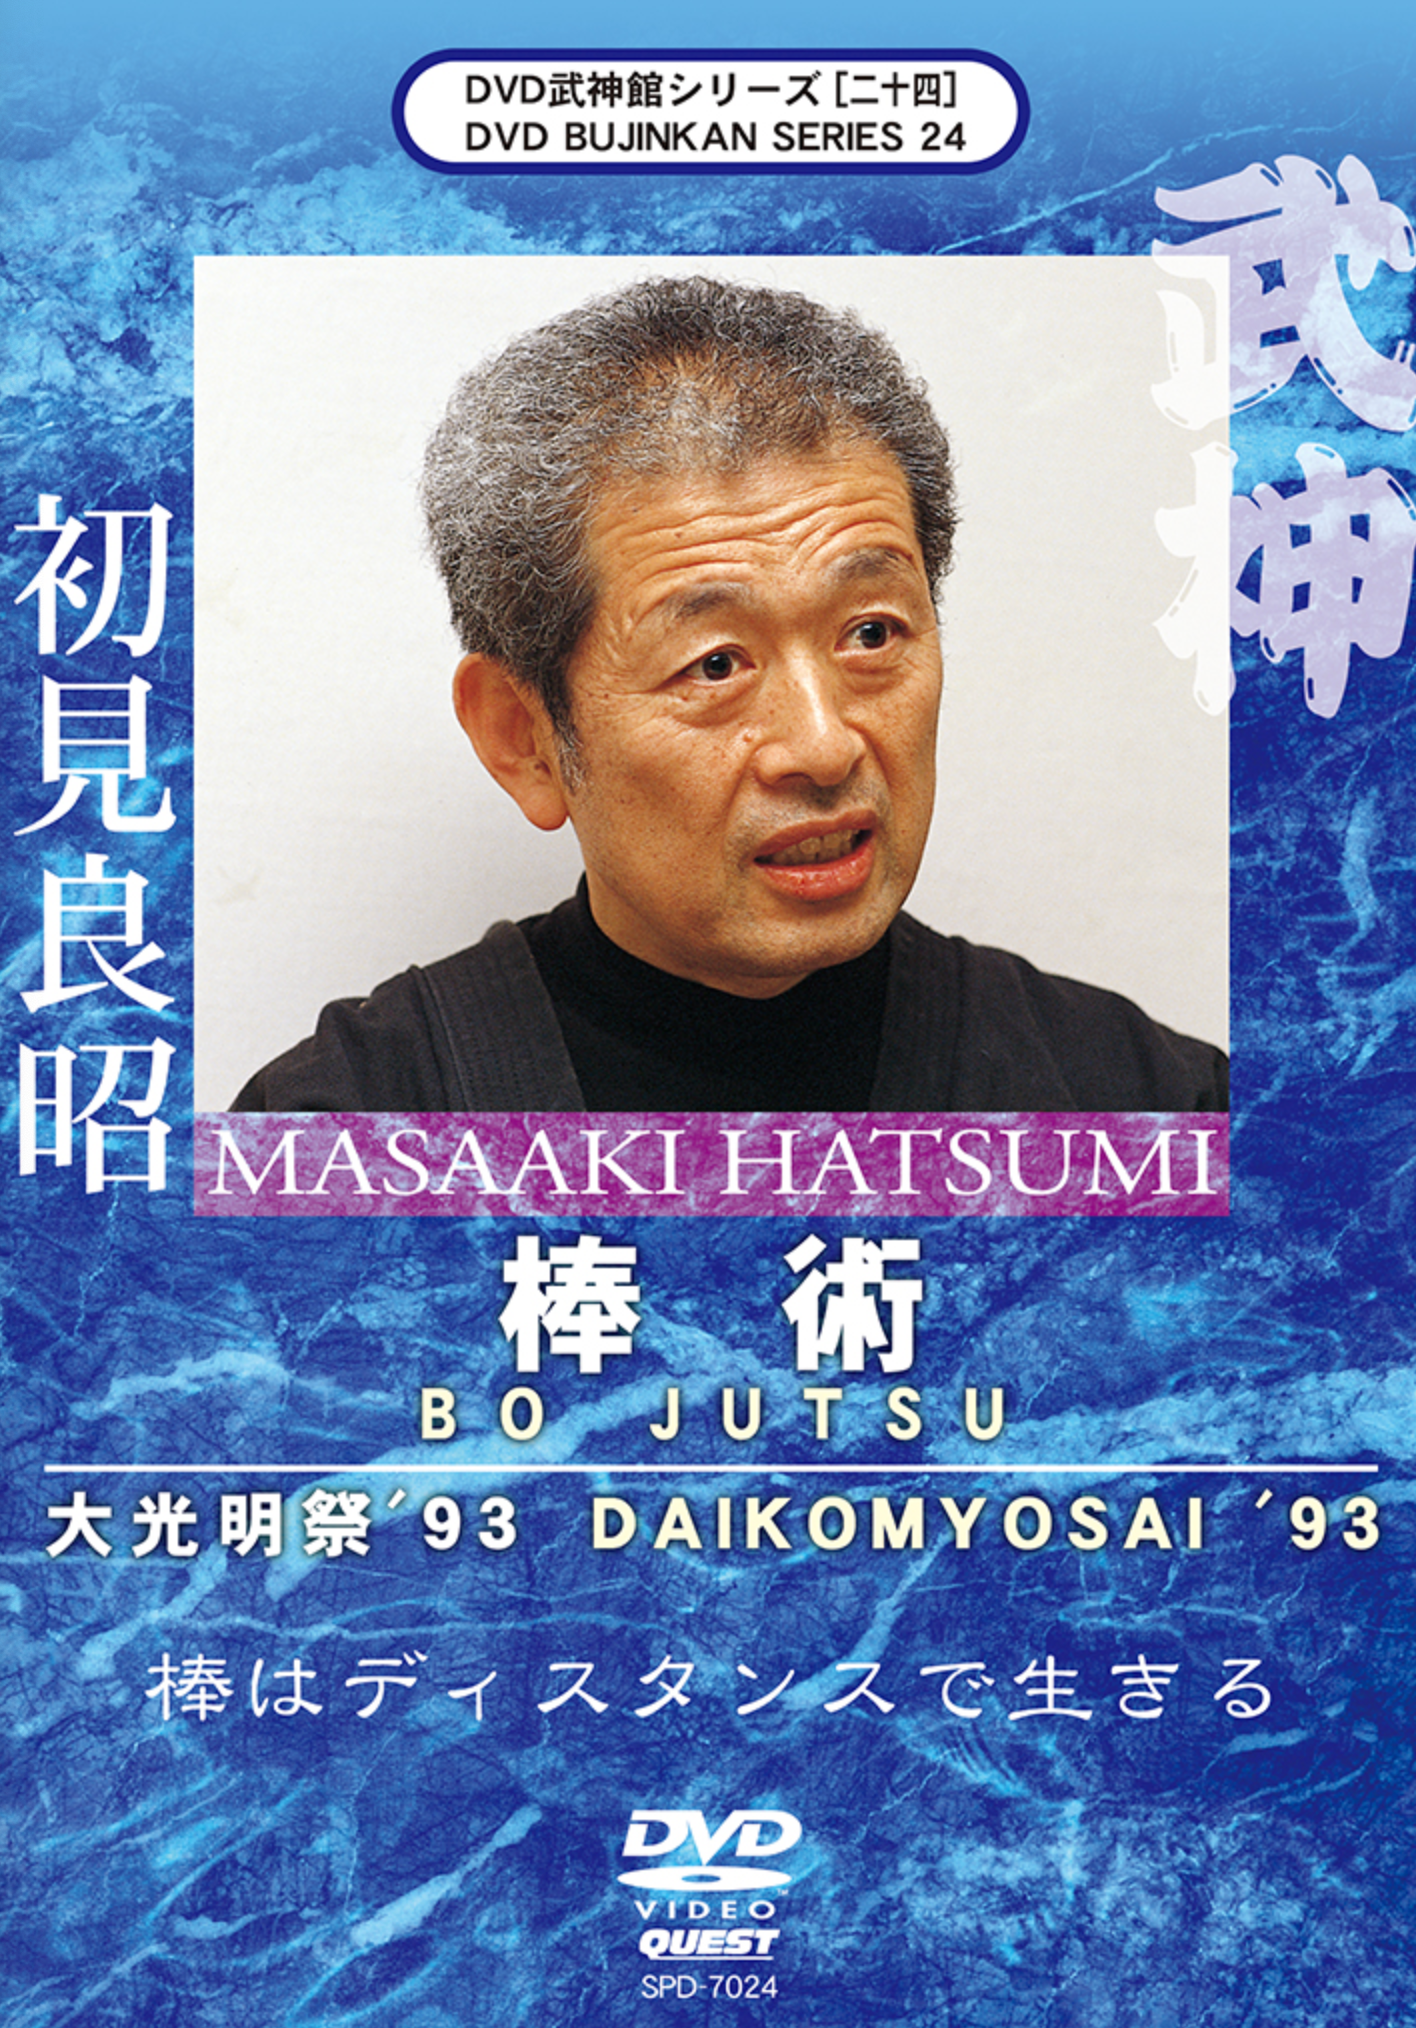 Bujinkan DVD Series 24: Bojutsu with Masaaki Hatsumi - Budovideos Inc